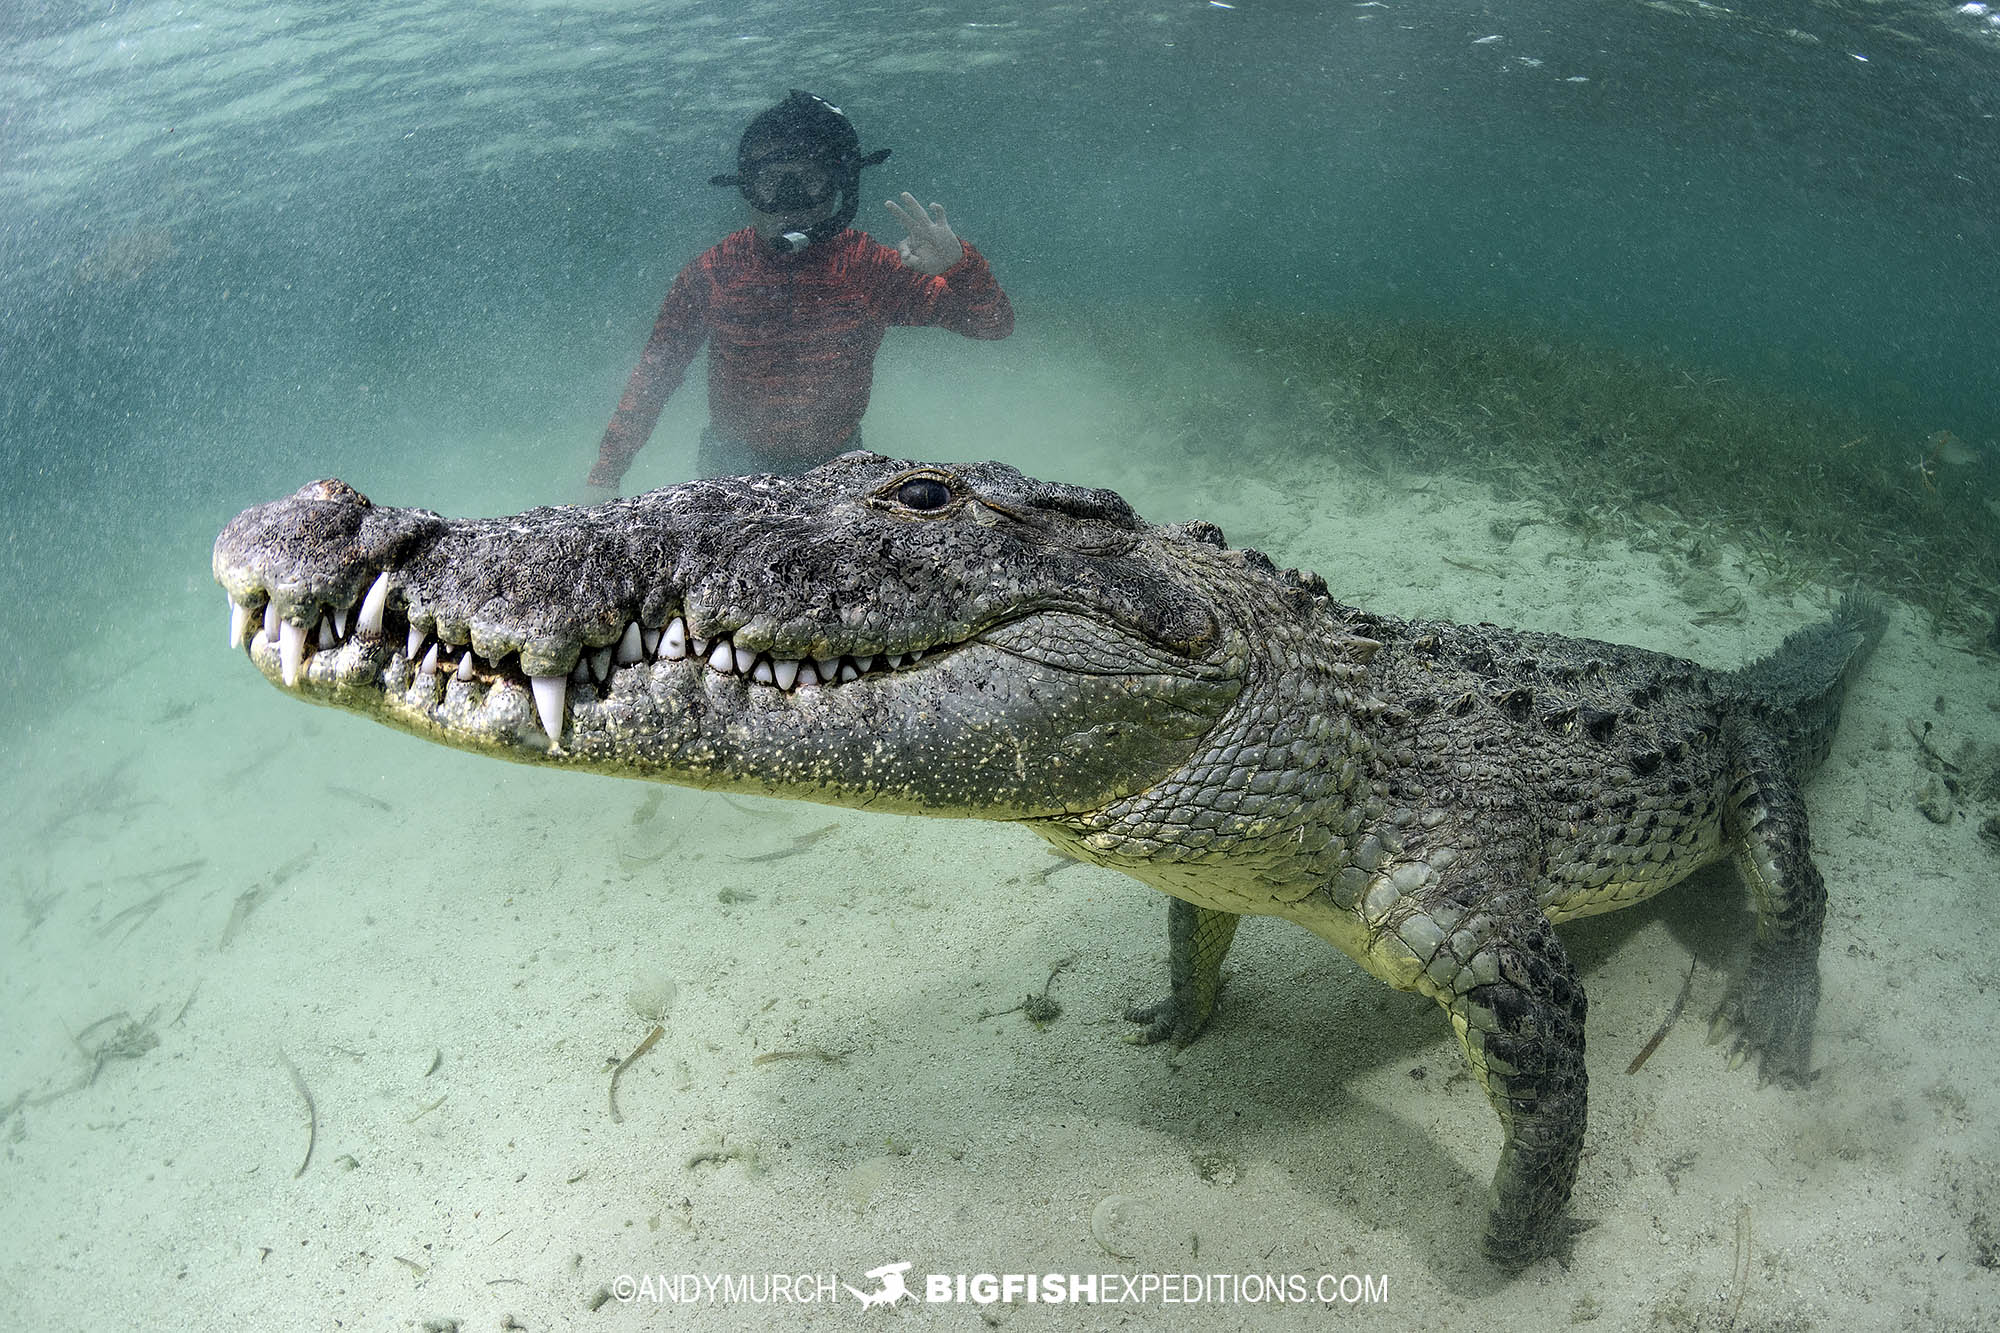 Snorkeling with American Crocodiles